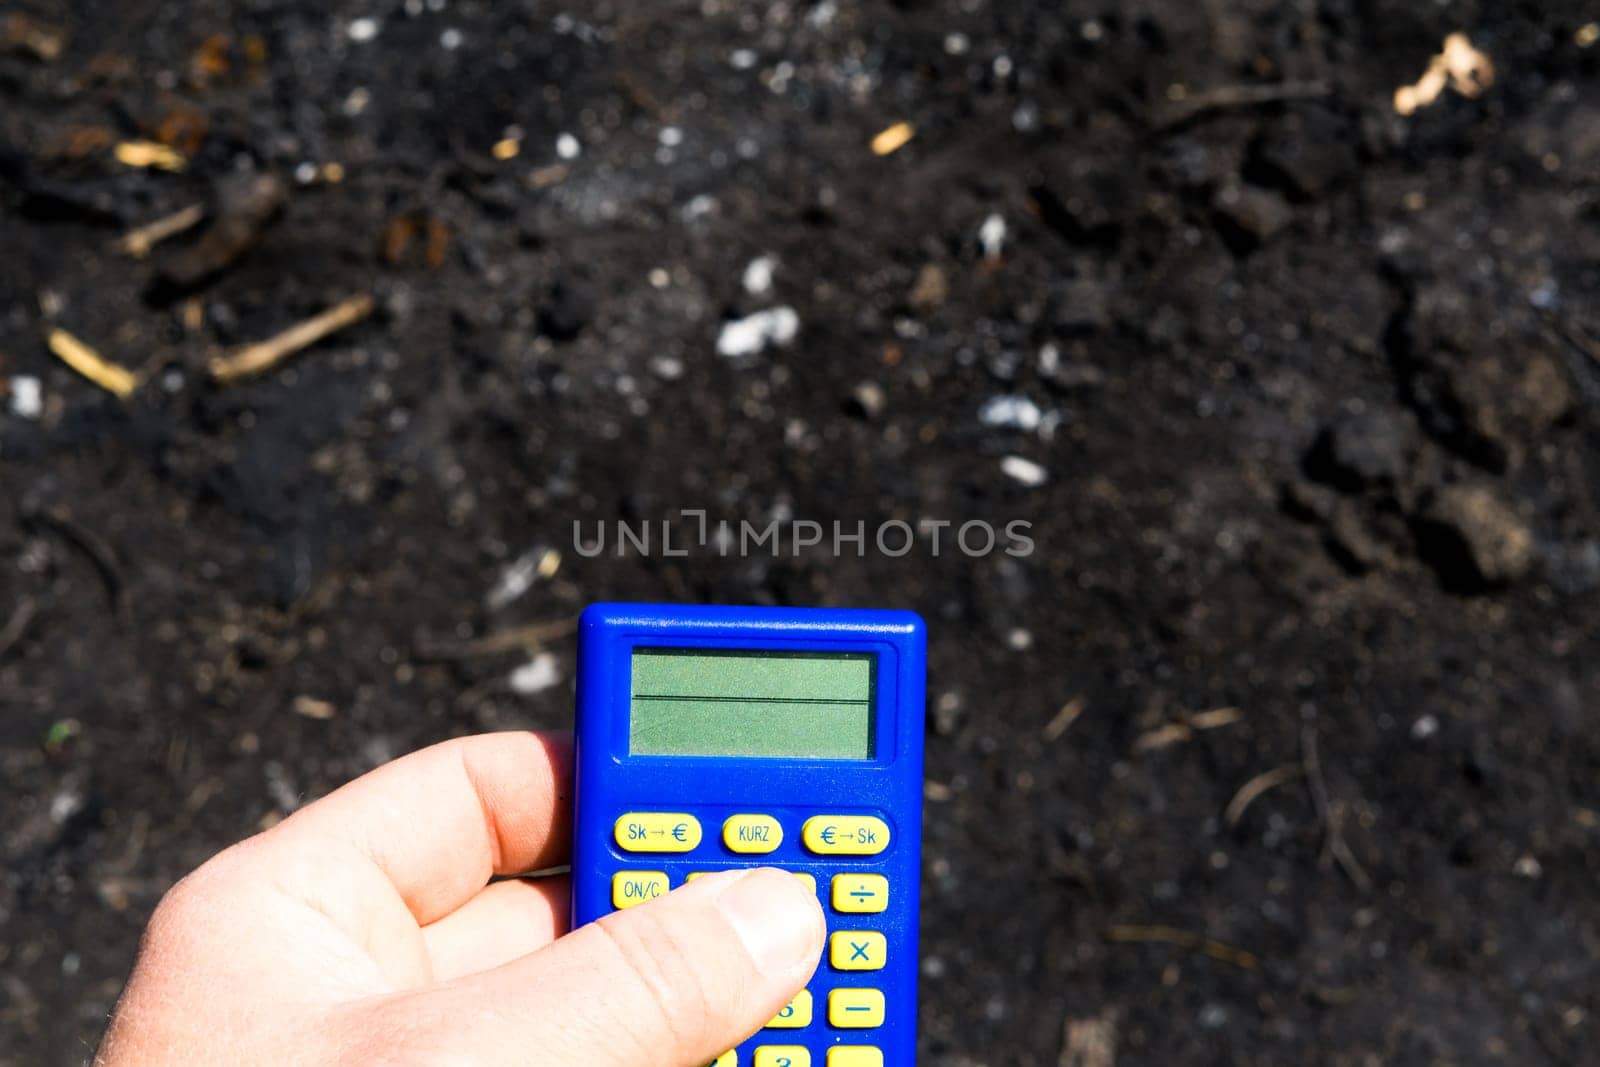 Blue calculator in dark soil, burnt ground after a fire